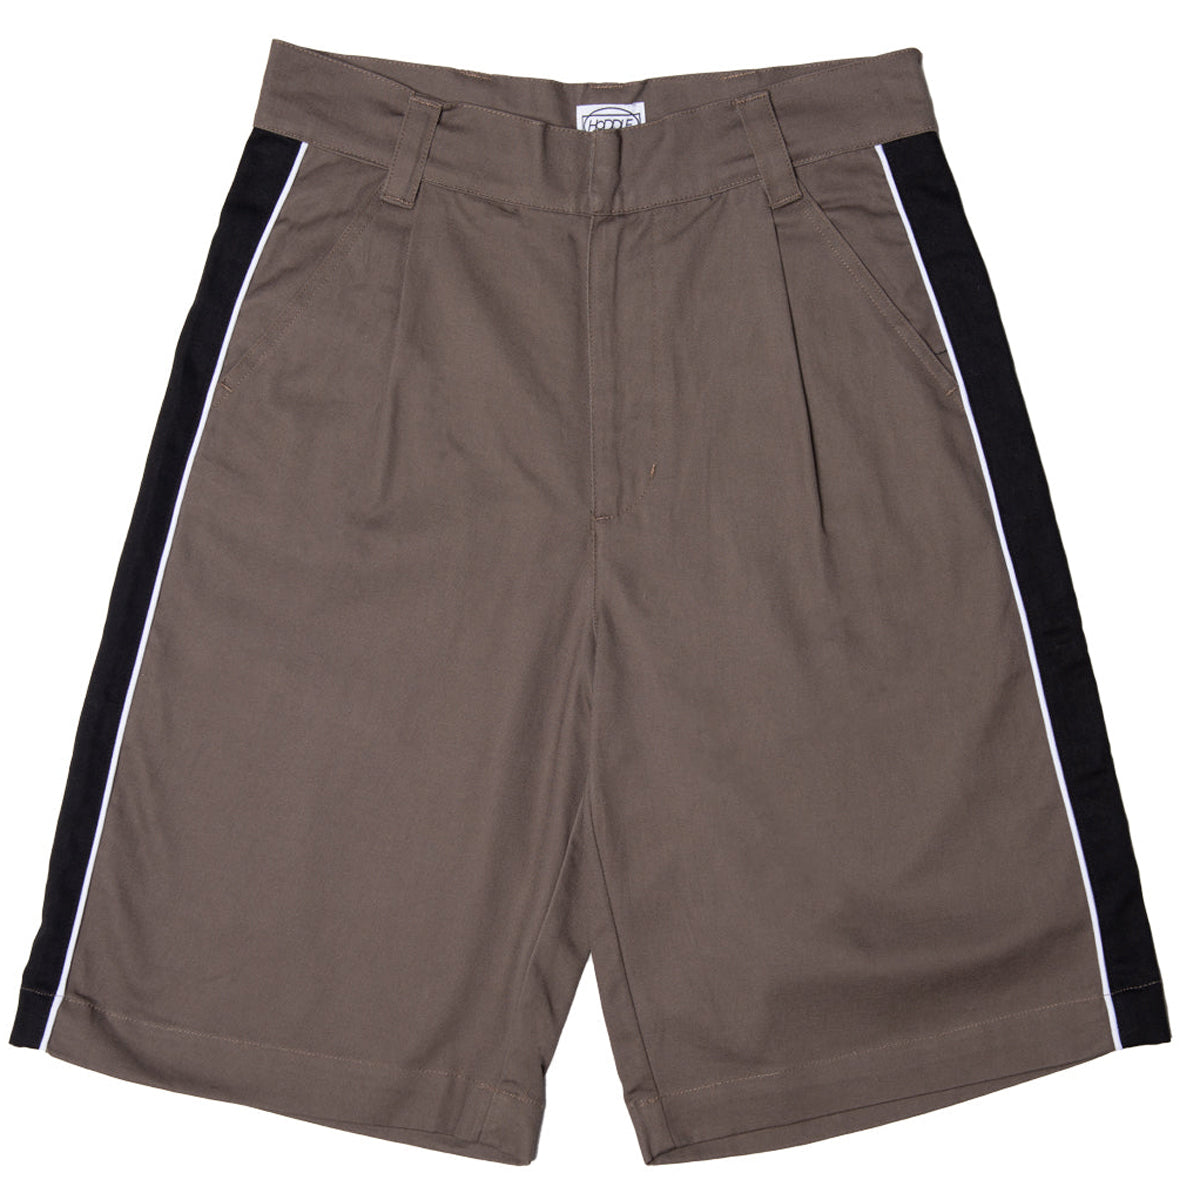 Hoddle Bermuda Shorts - Gunmetal Grey/Black image 1